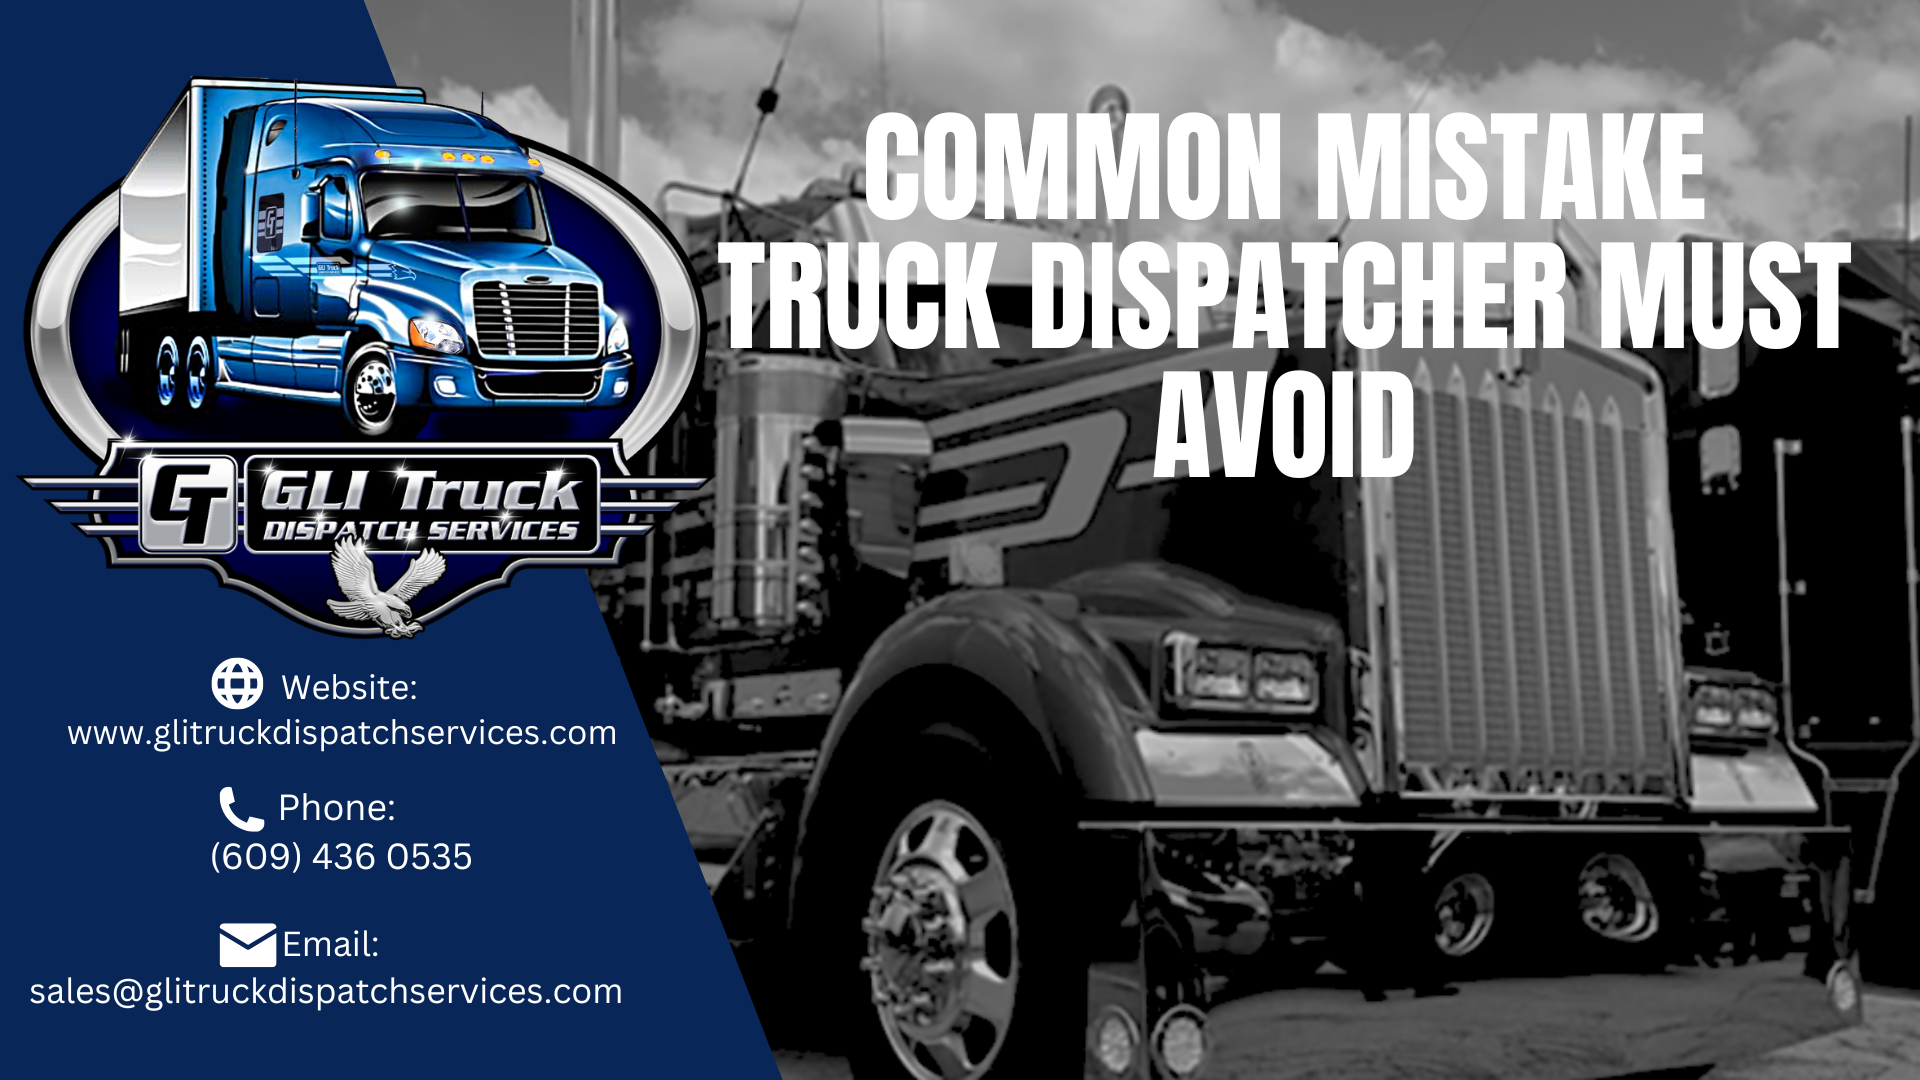 Common Mistake Truck Dispatcher must avoid